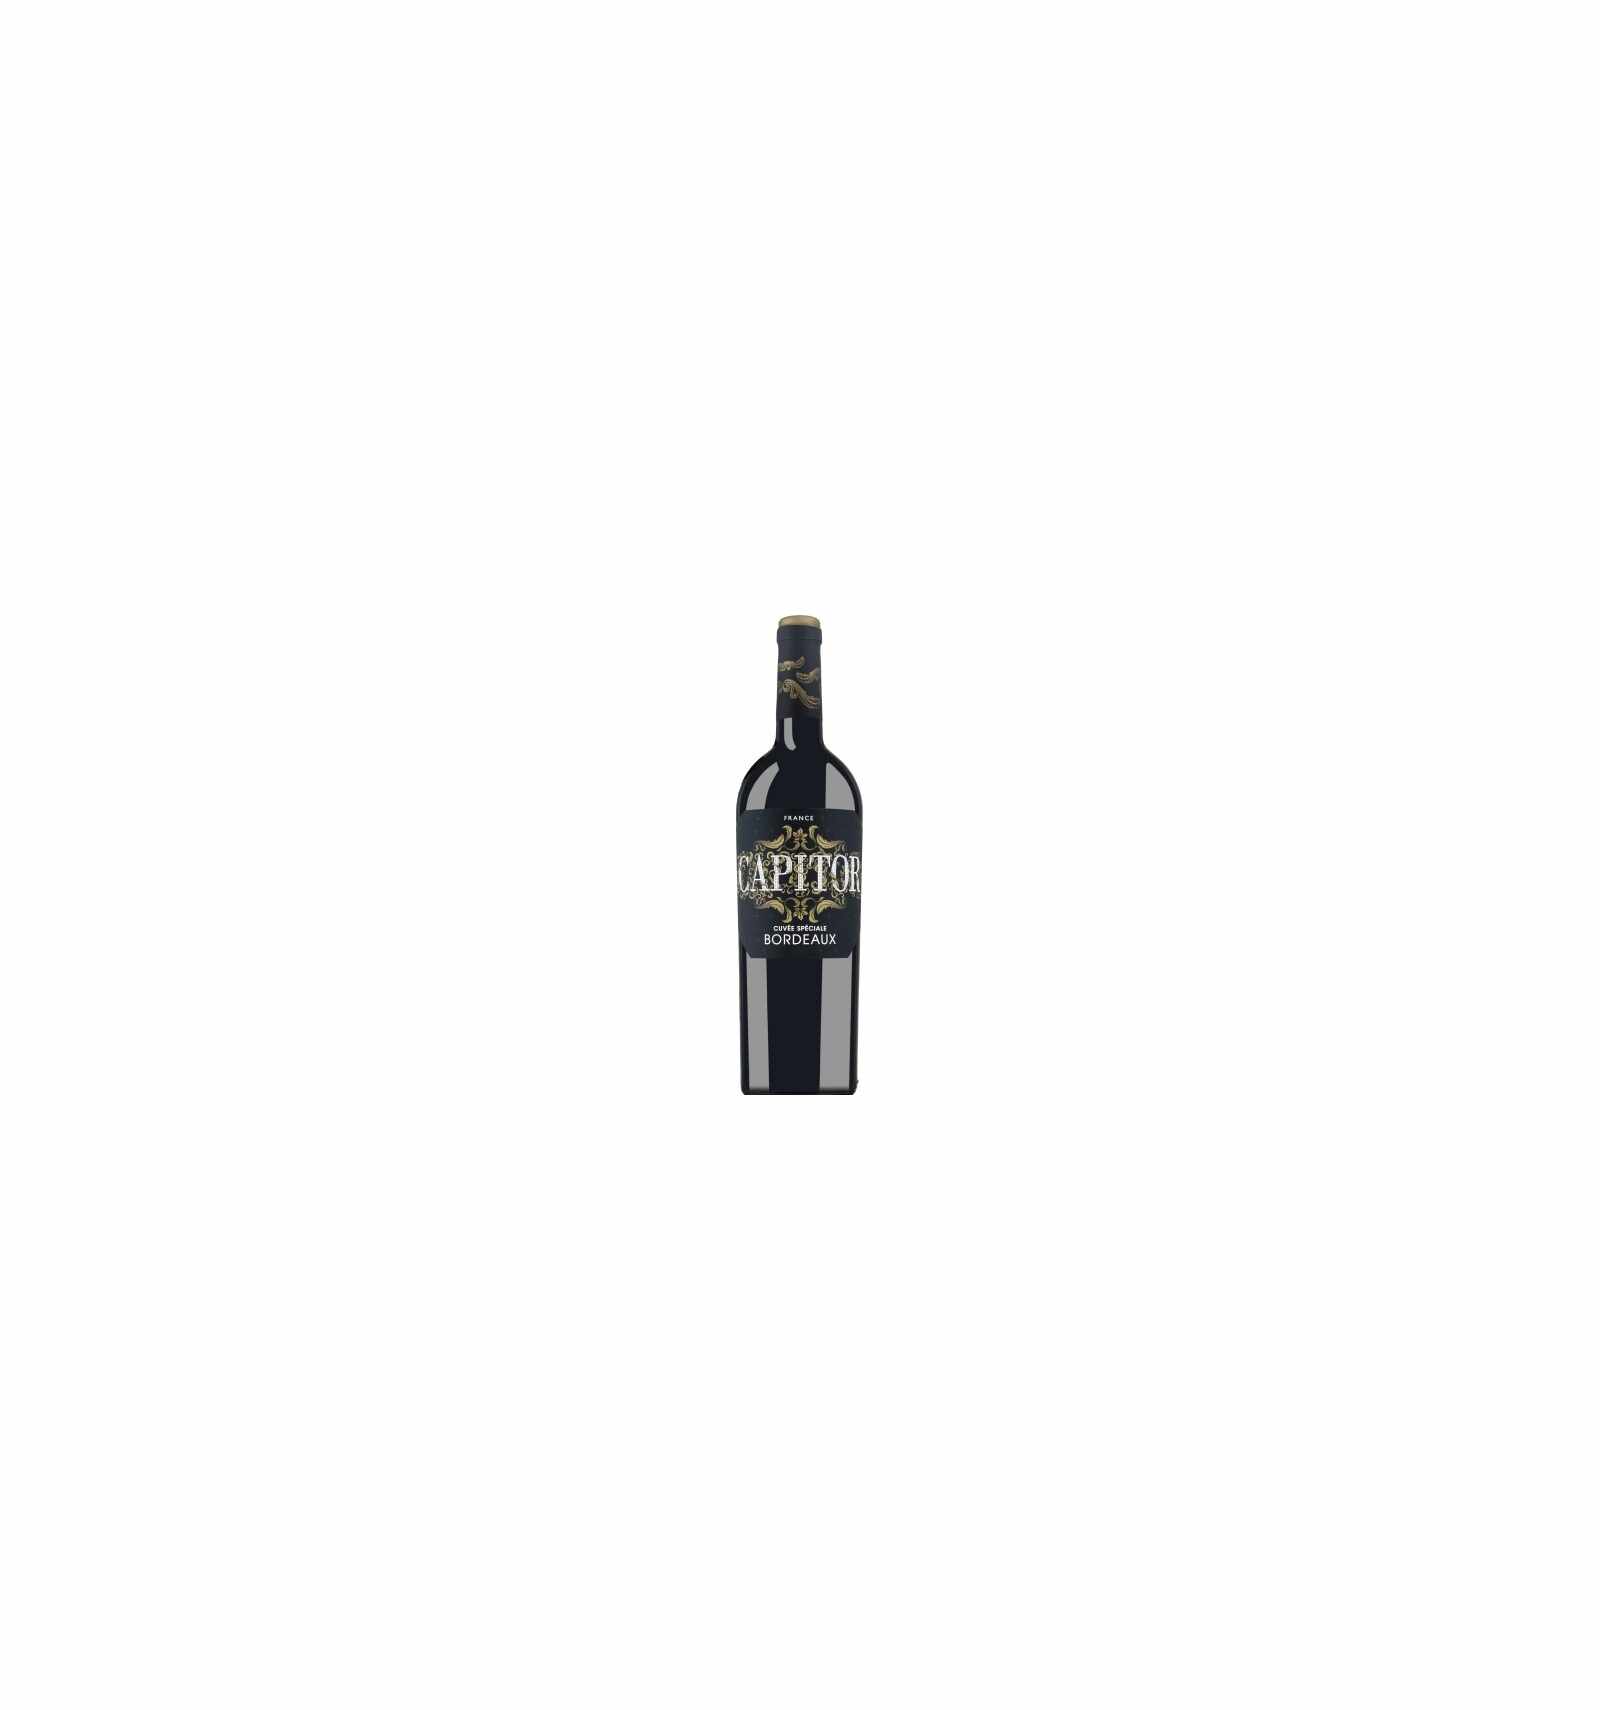 Vin rosu, Cupaj, Capitor Bordeaux, 0.75L, 13% alc., Franta